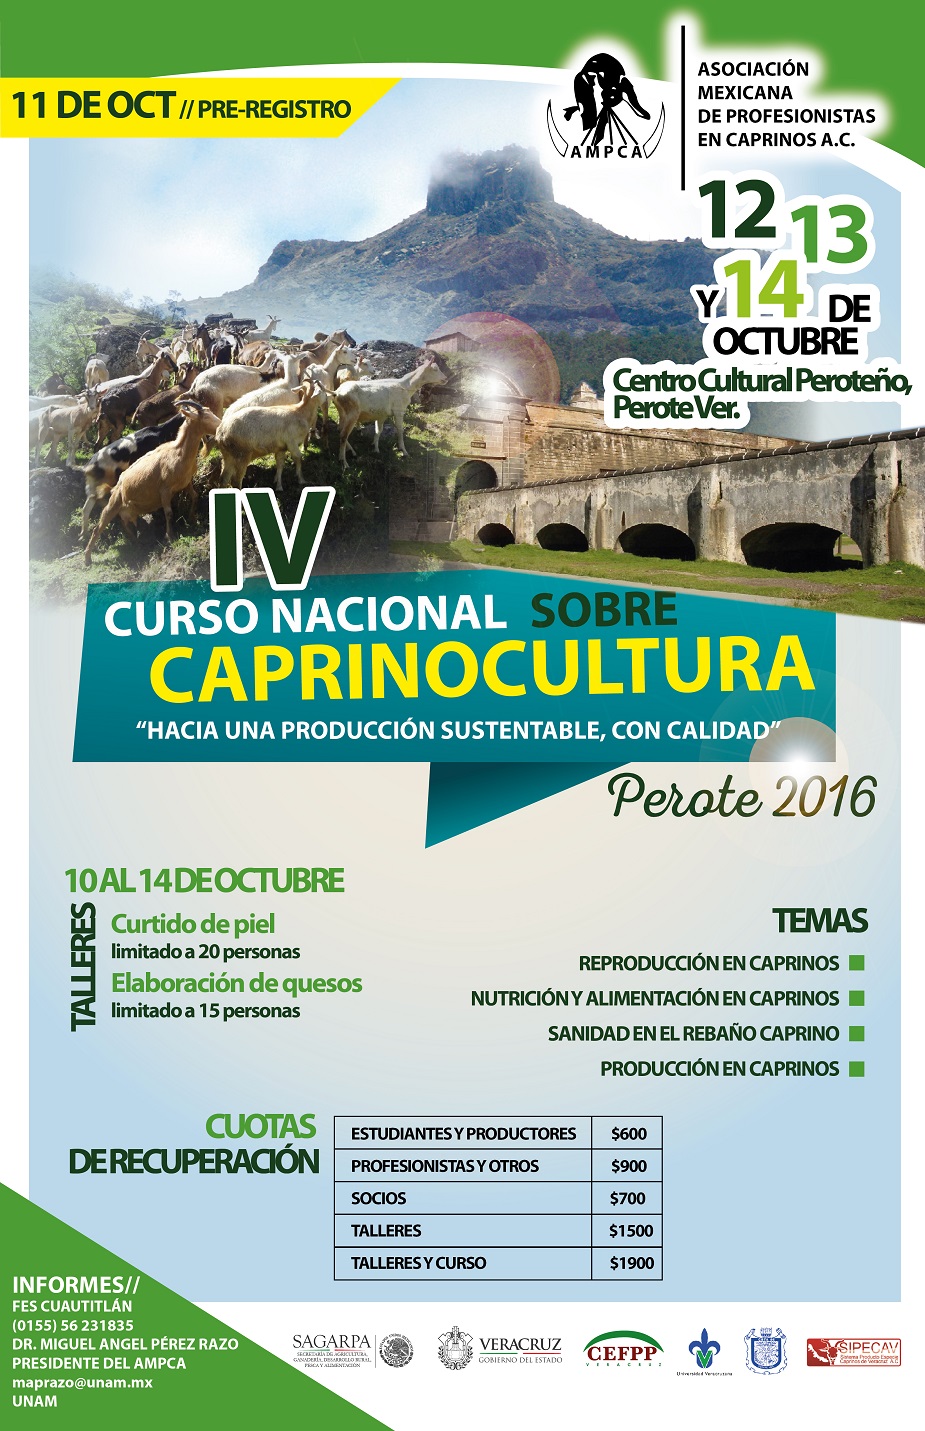 IV Curso Nacional Caprinocultura, Perote 2016